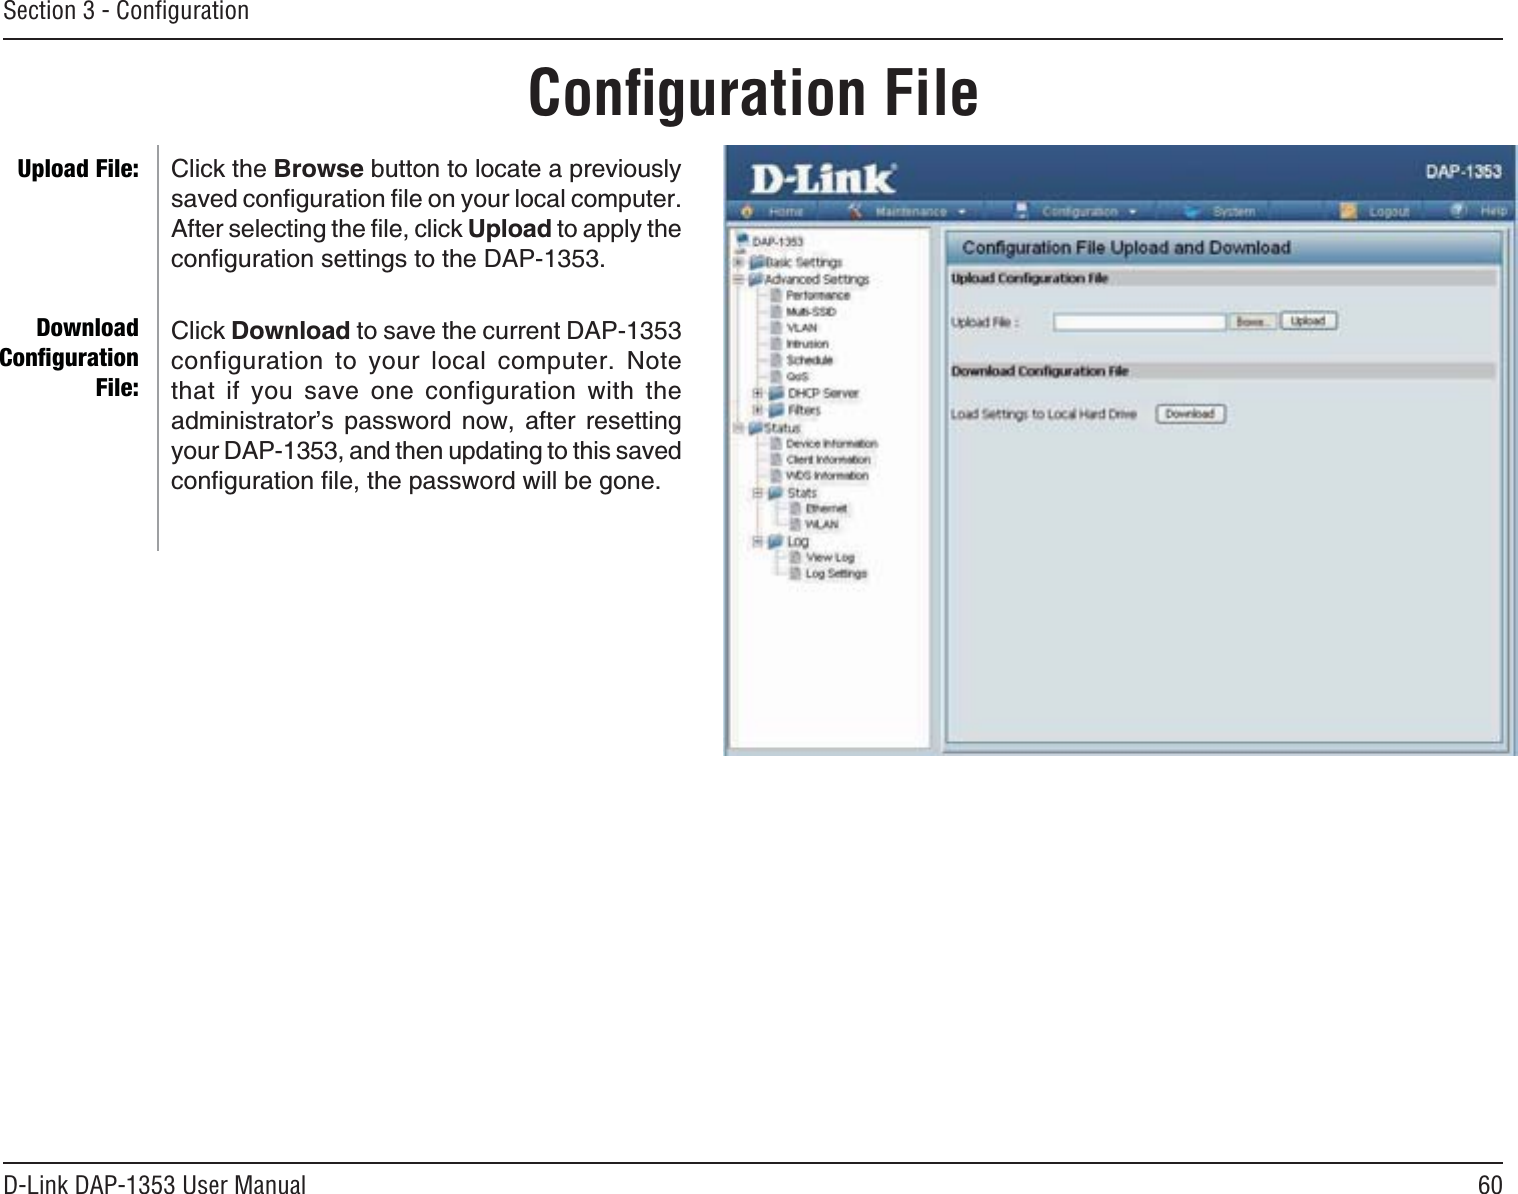 60D-Link DAP-1353 User ManualSection 3 - ConﬁgurationConﬁguration FileClick the BrowseDWVVQPVQNQECVGCRTGXKQWUN[UCXGFEQPſIWTCVKQPſNGQP[QWTNQECNEQORWVGT#HVGTUGNGEVKPIVJGſNGENKEMUpload to apply the EQPſIWTCVKQPUGVVKPIUVQVJG&amp;#2Click Download to save the current DAP-1353 configuration to your local computer. Note that if you save one configuration with the administrator’s password now, after resetting your DAP-1353, and then updating to this saved EQPſIWTCVKQPſNGVJGRCUUYQTFYKNNDGIQPGUpload File:DownloadConﬁguration File: